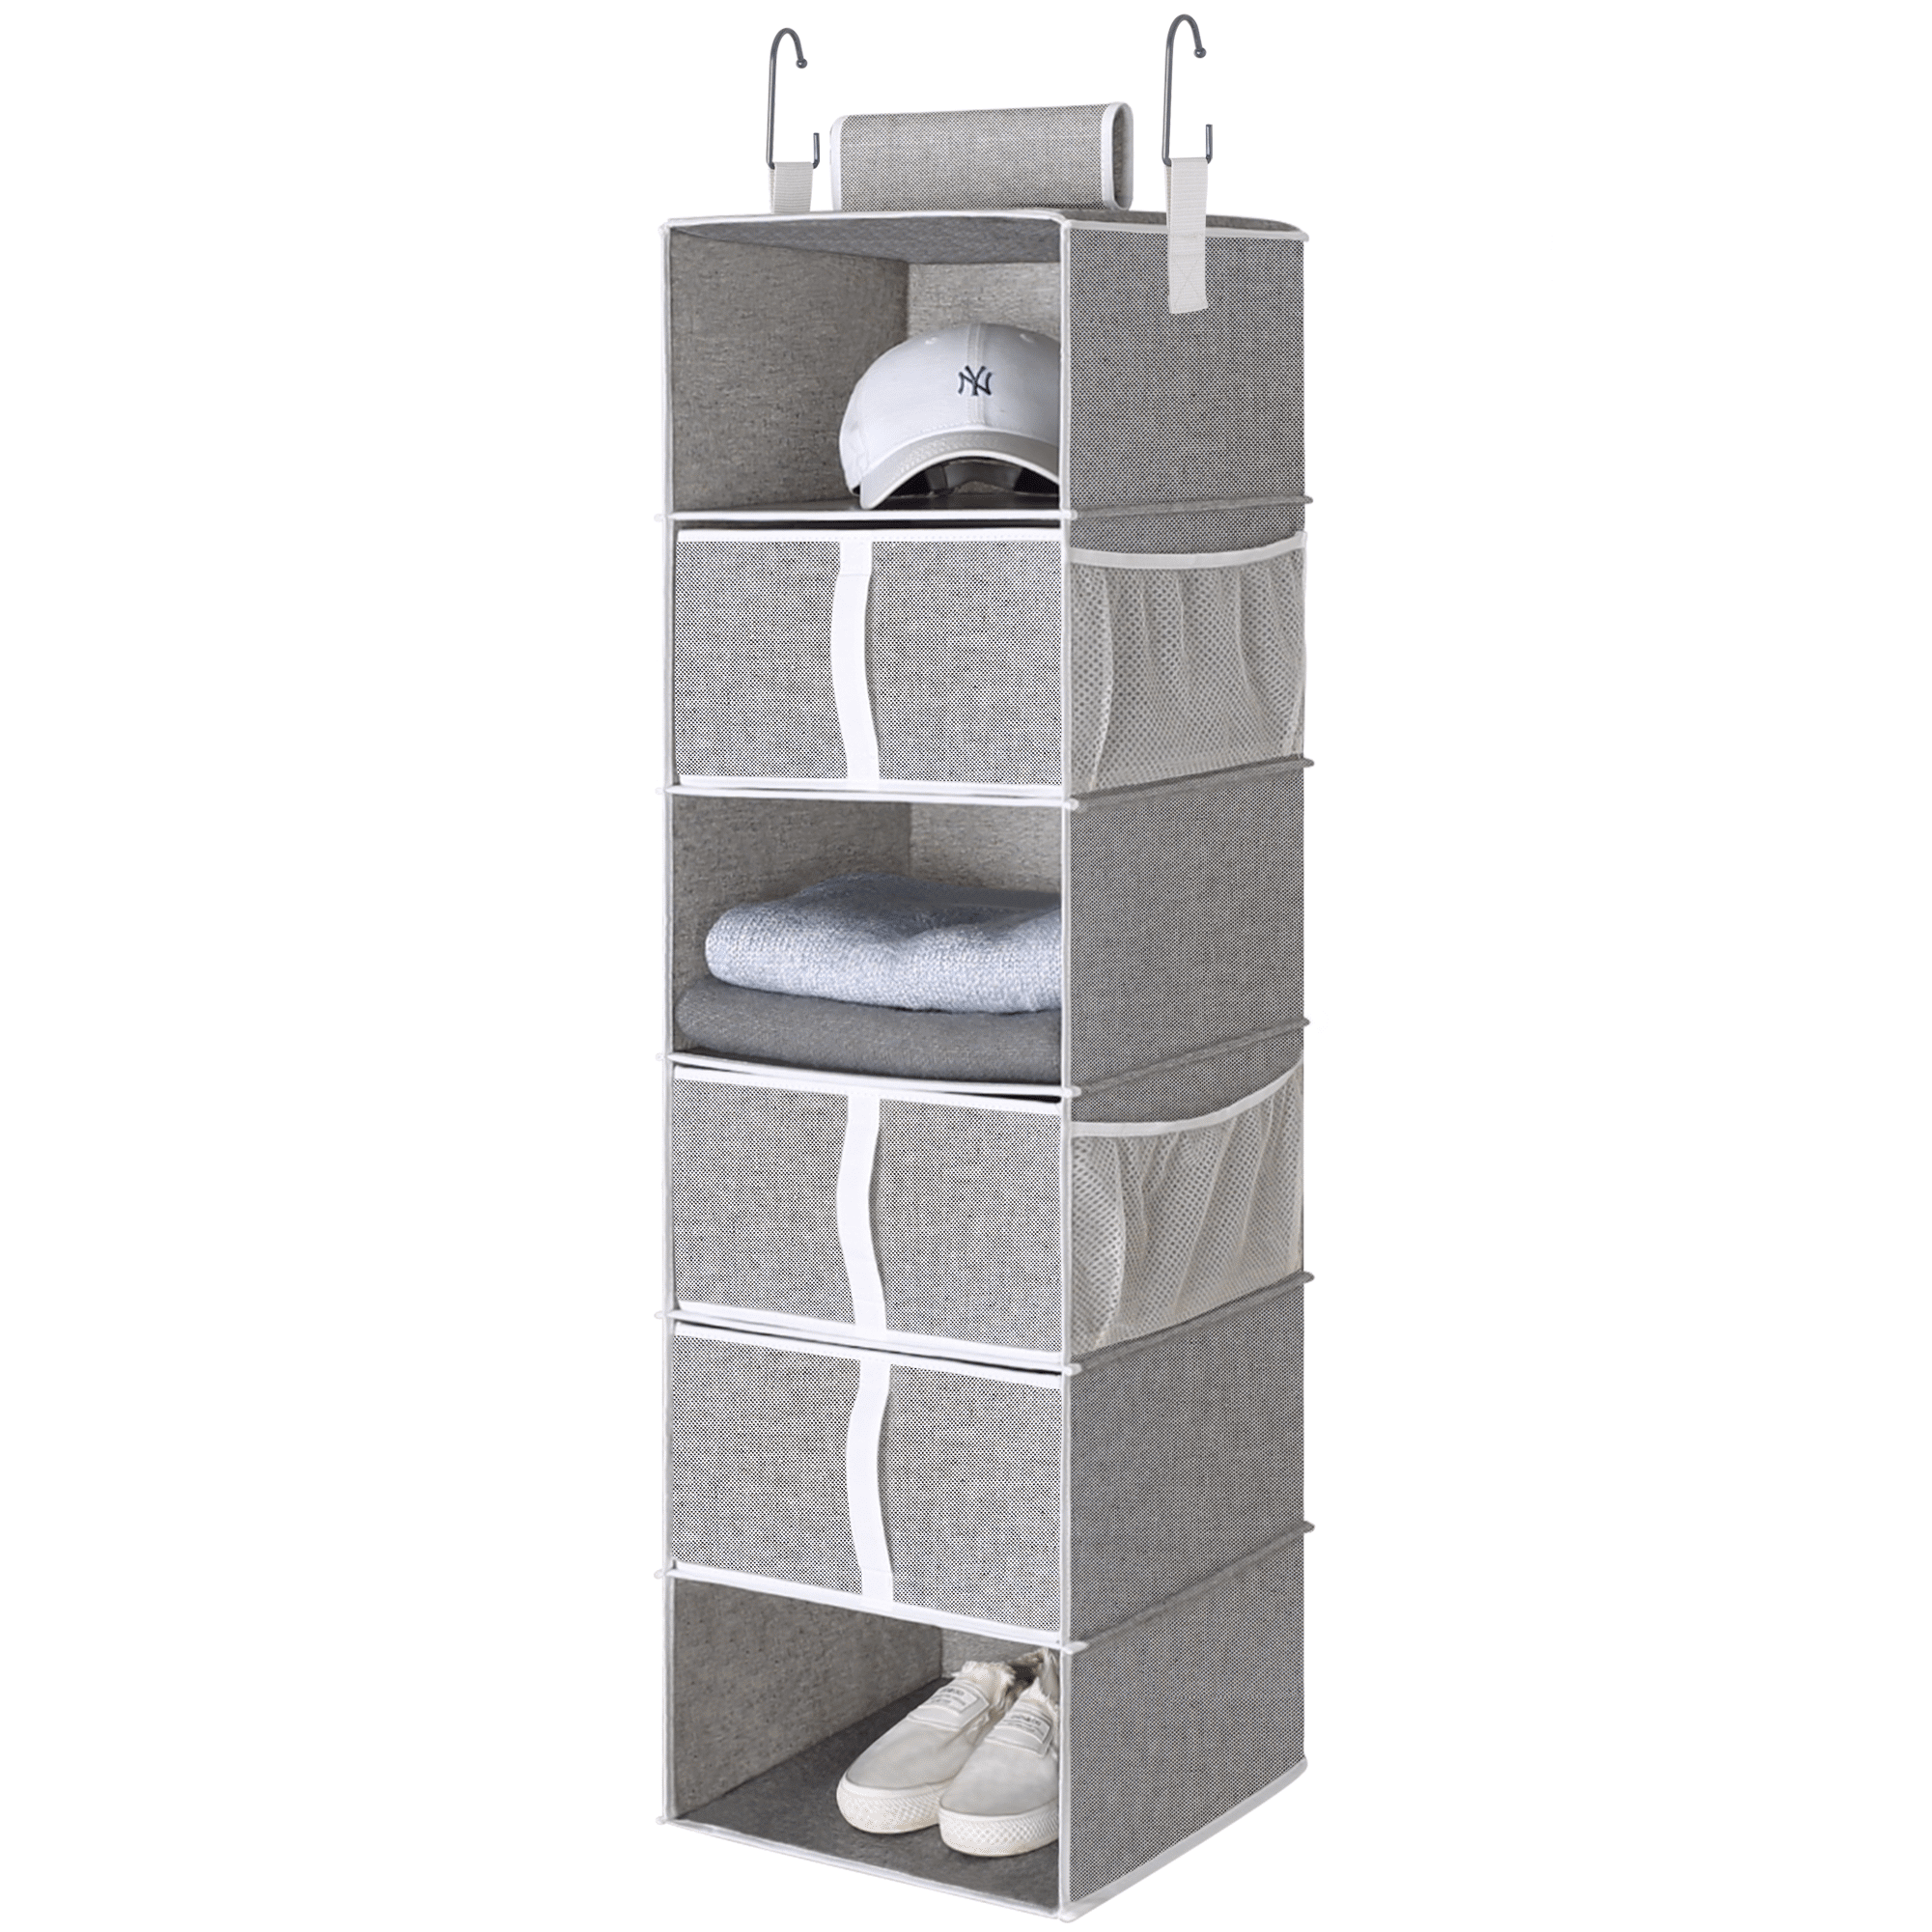 Thoften Hanging Wardrobe Storage Organiser In Grey w/ Five Shelves Six Pockets 